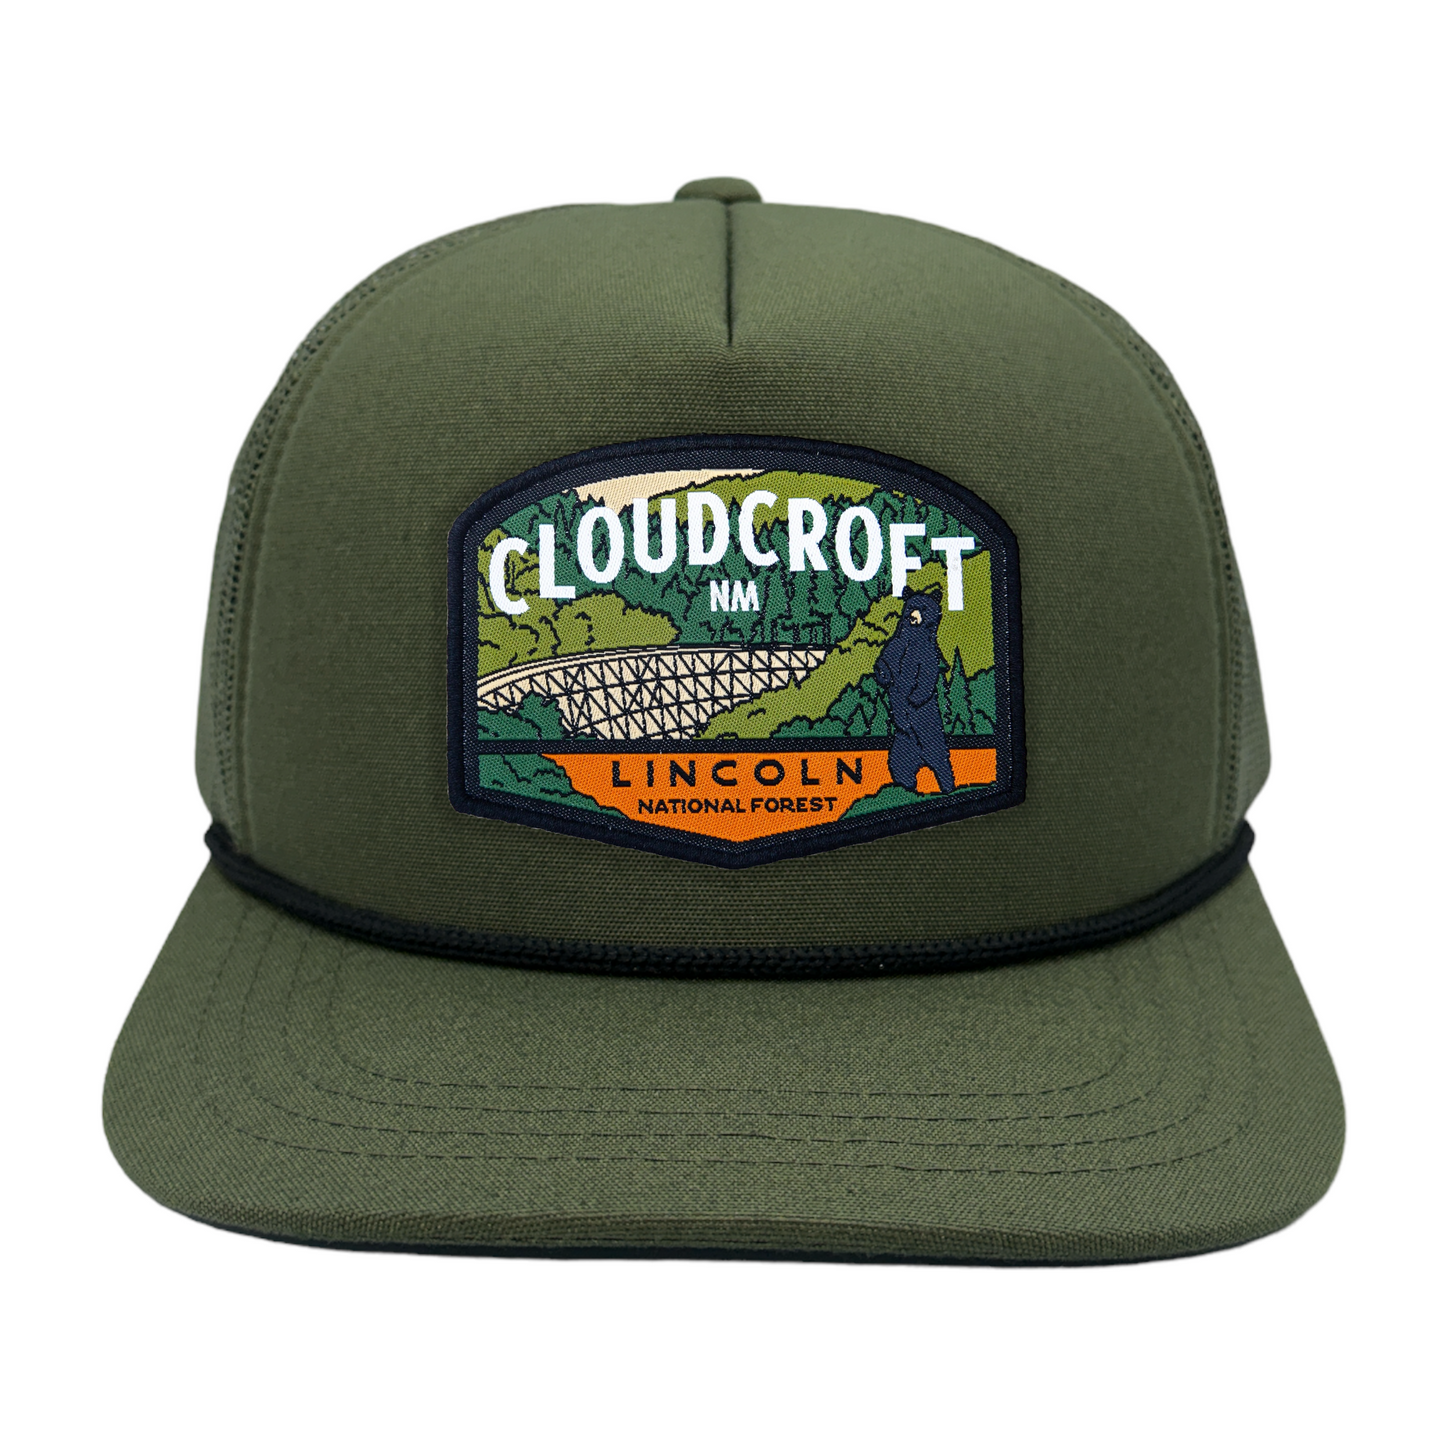 Cloudcroft, NM Trucker